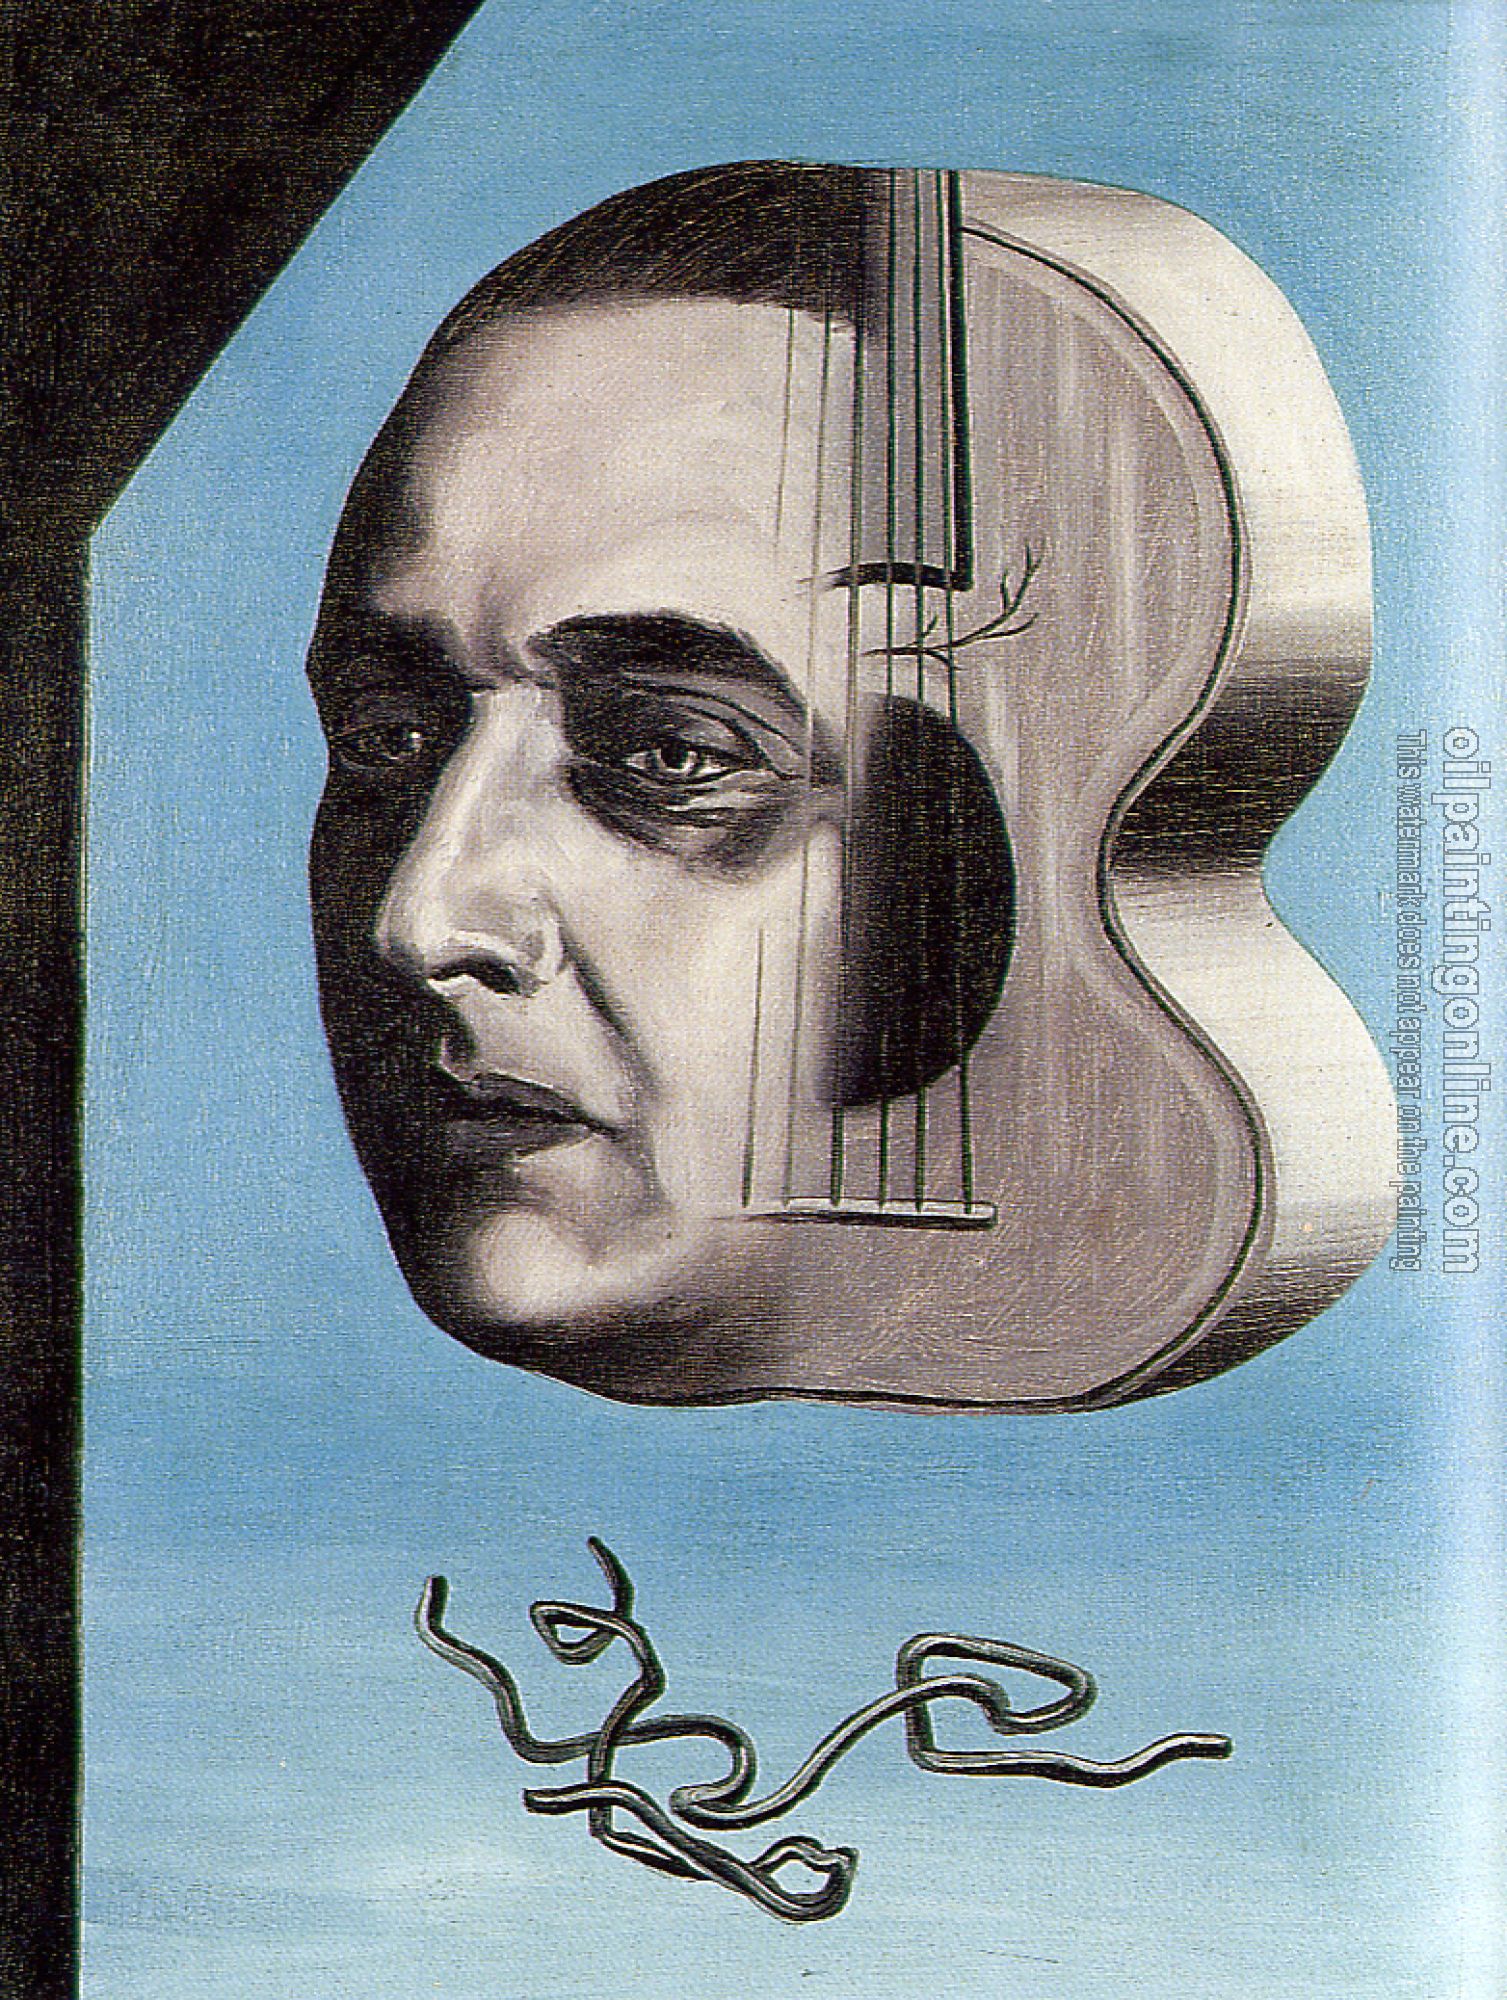 Magritte, Rene - portrait of P.G.van hecke